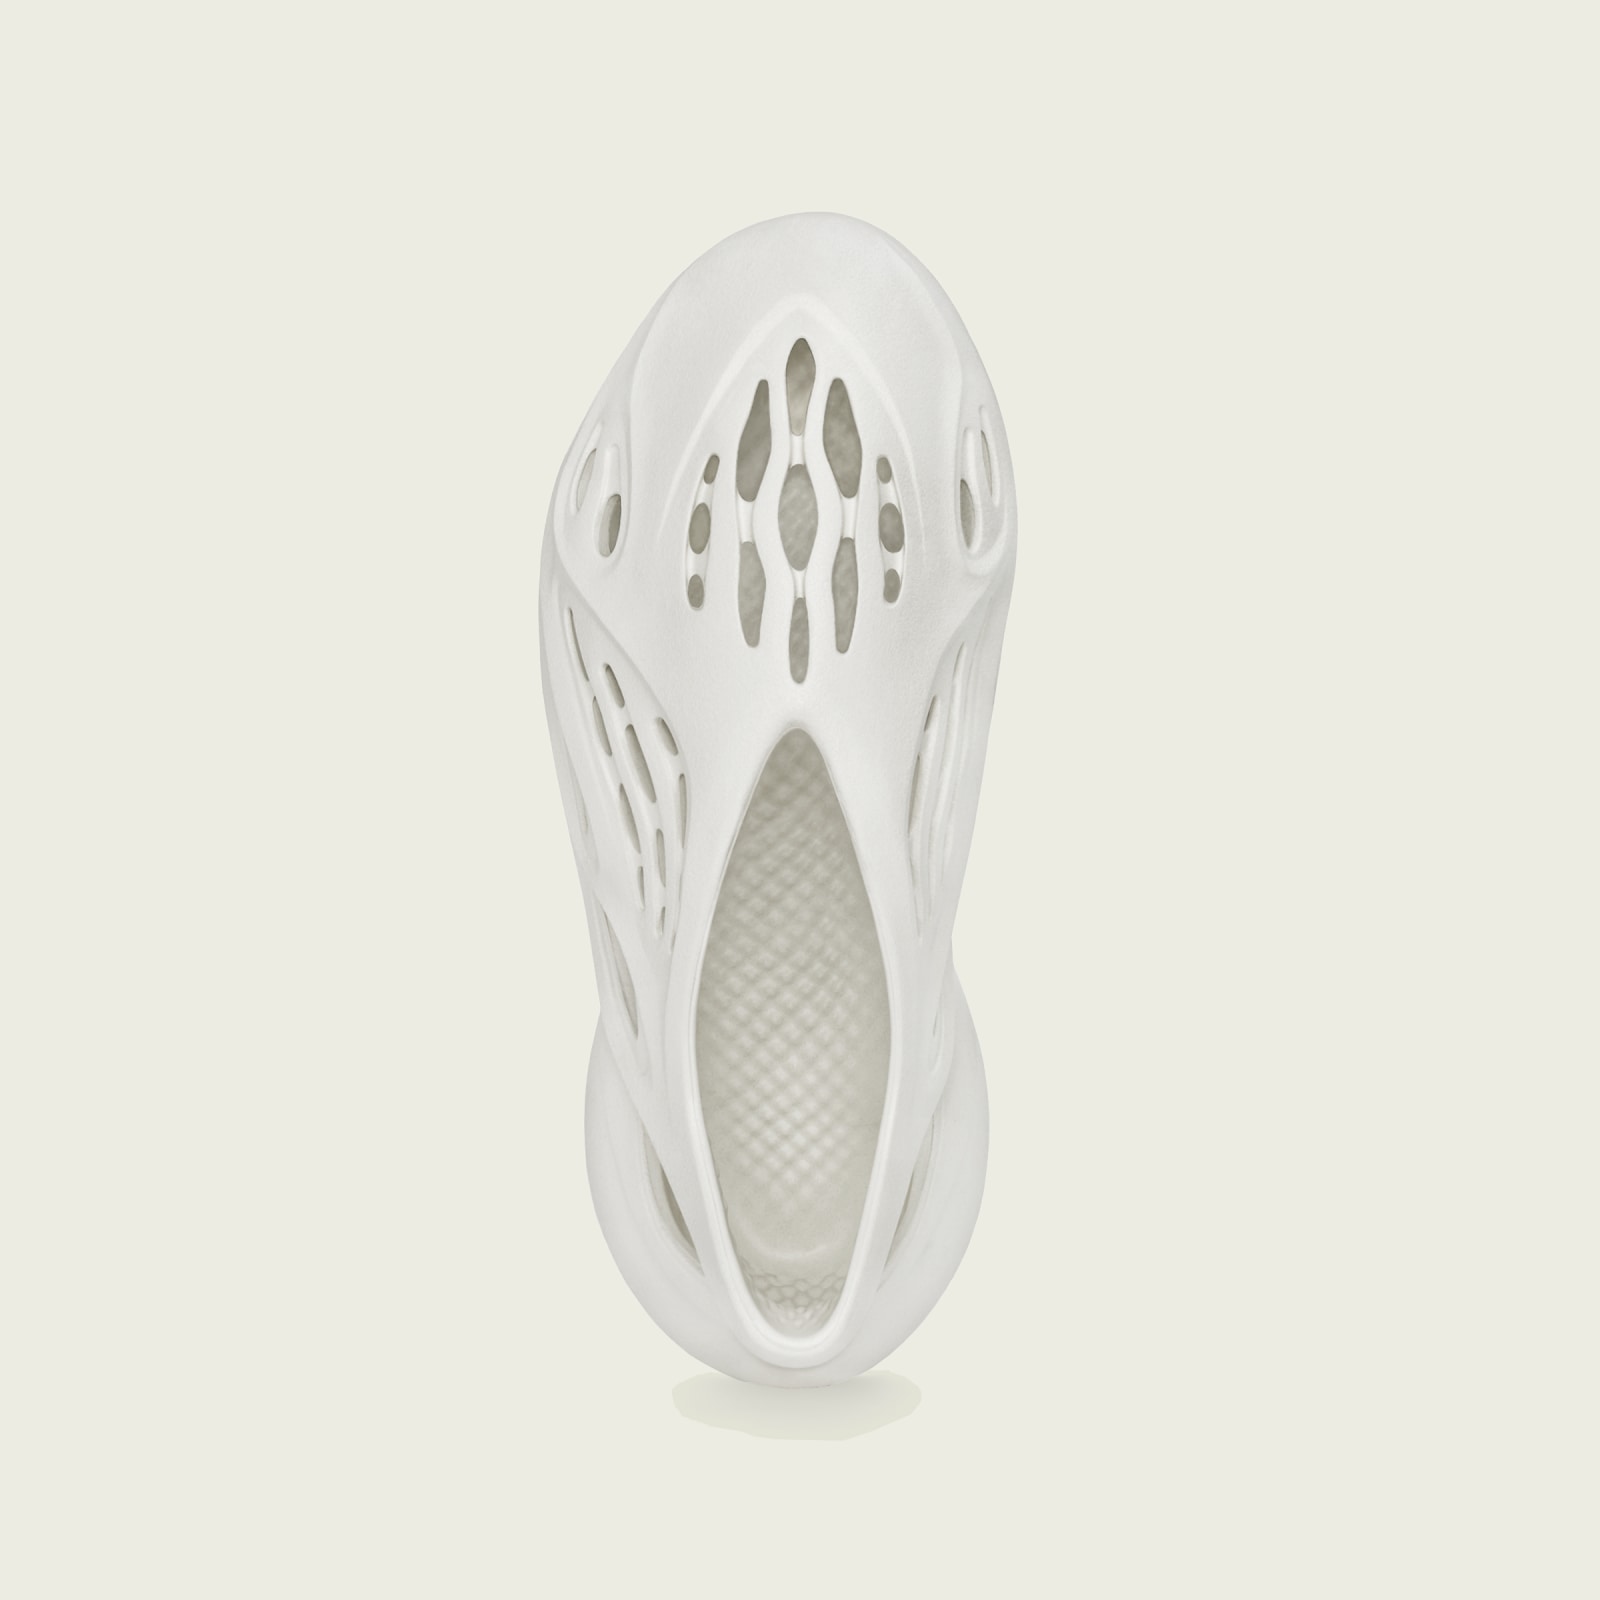 Adidas Yeezy
Foam Runner
« Sand »